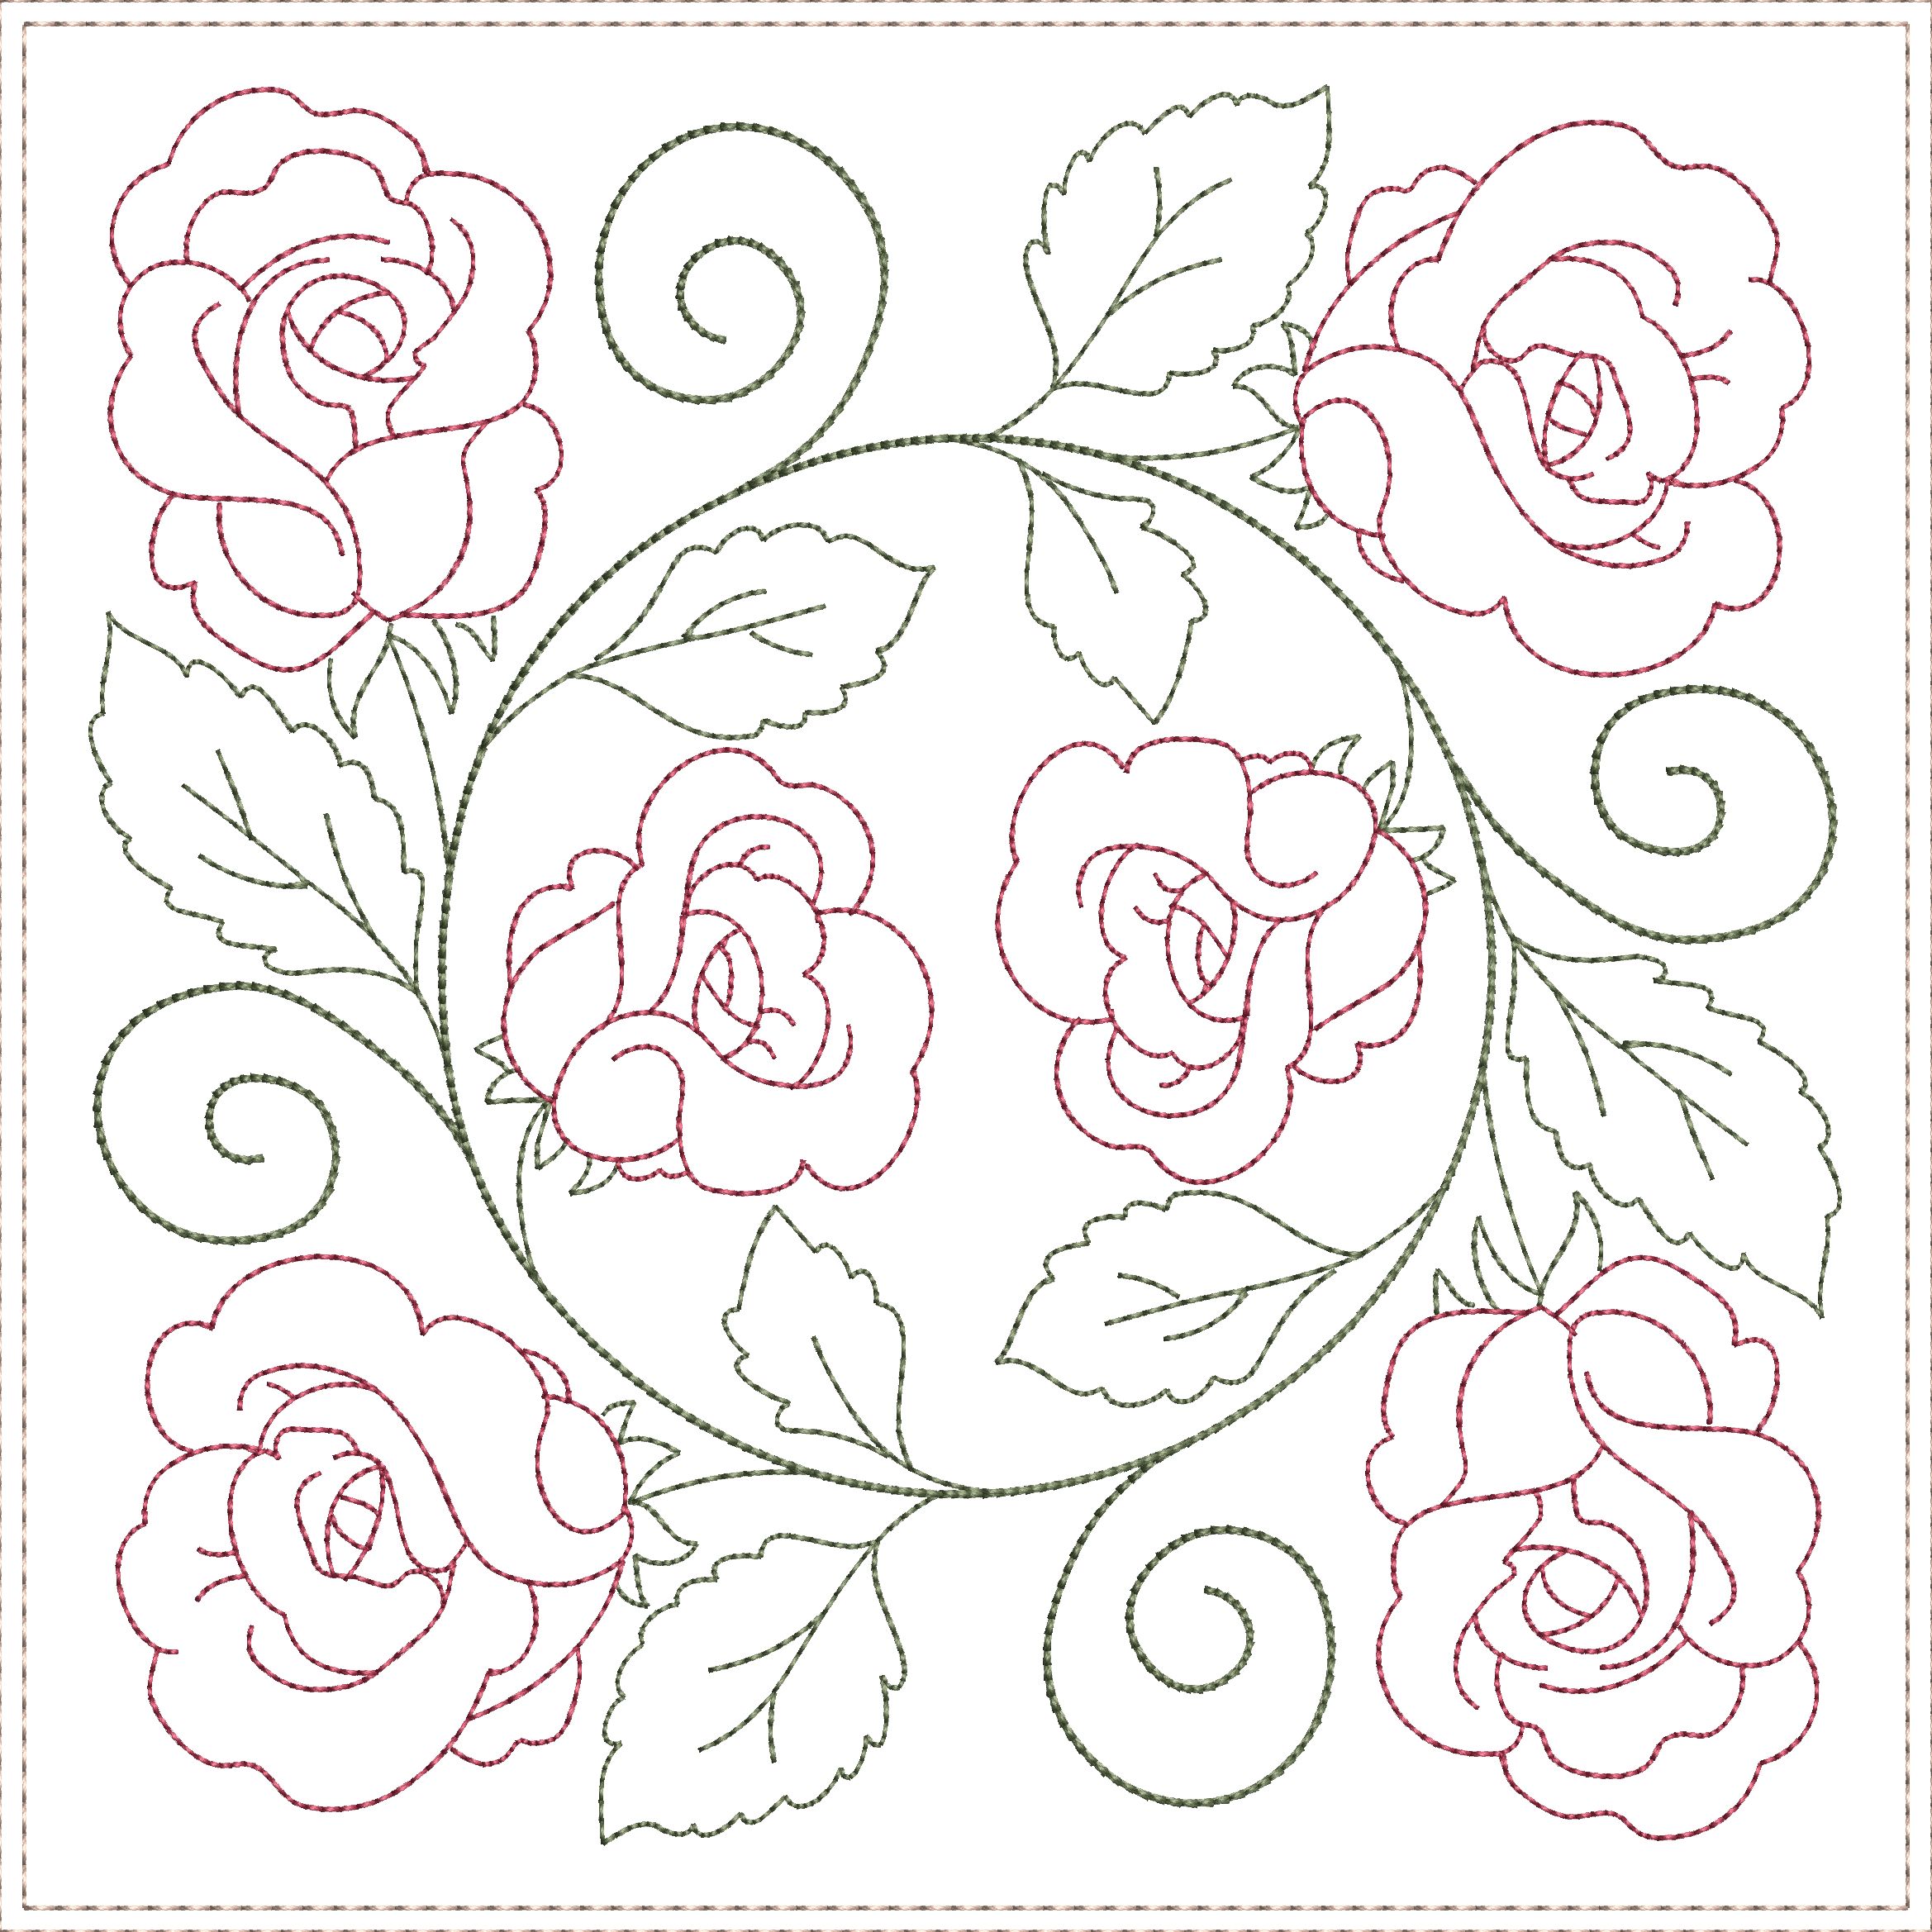 Circle of Roses-16